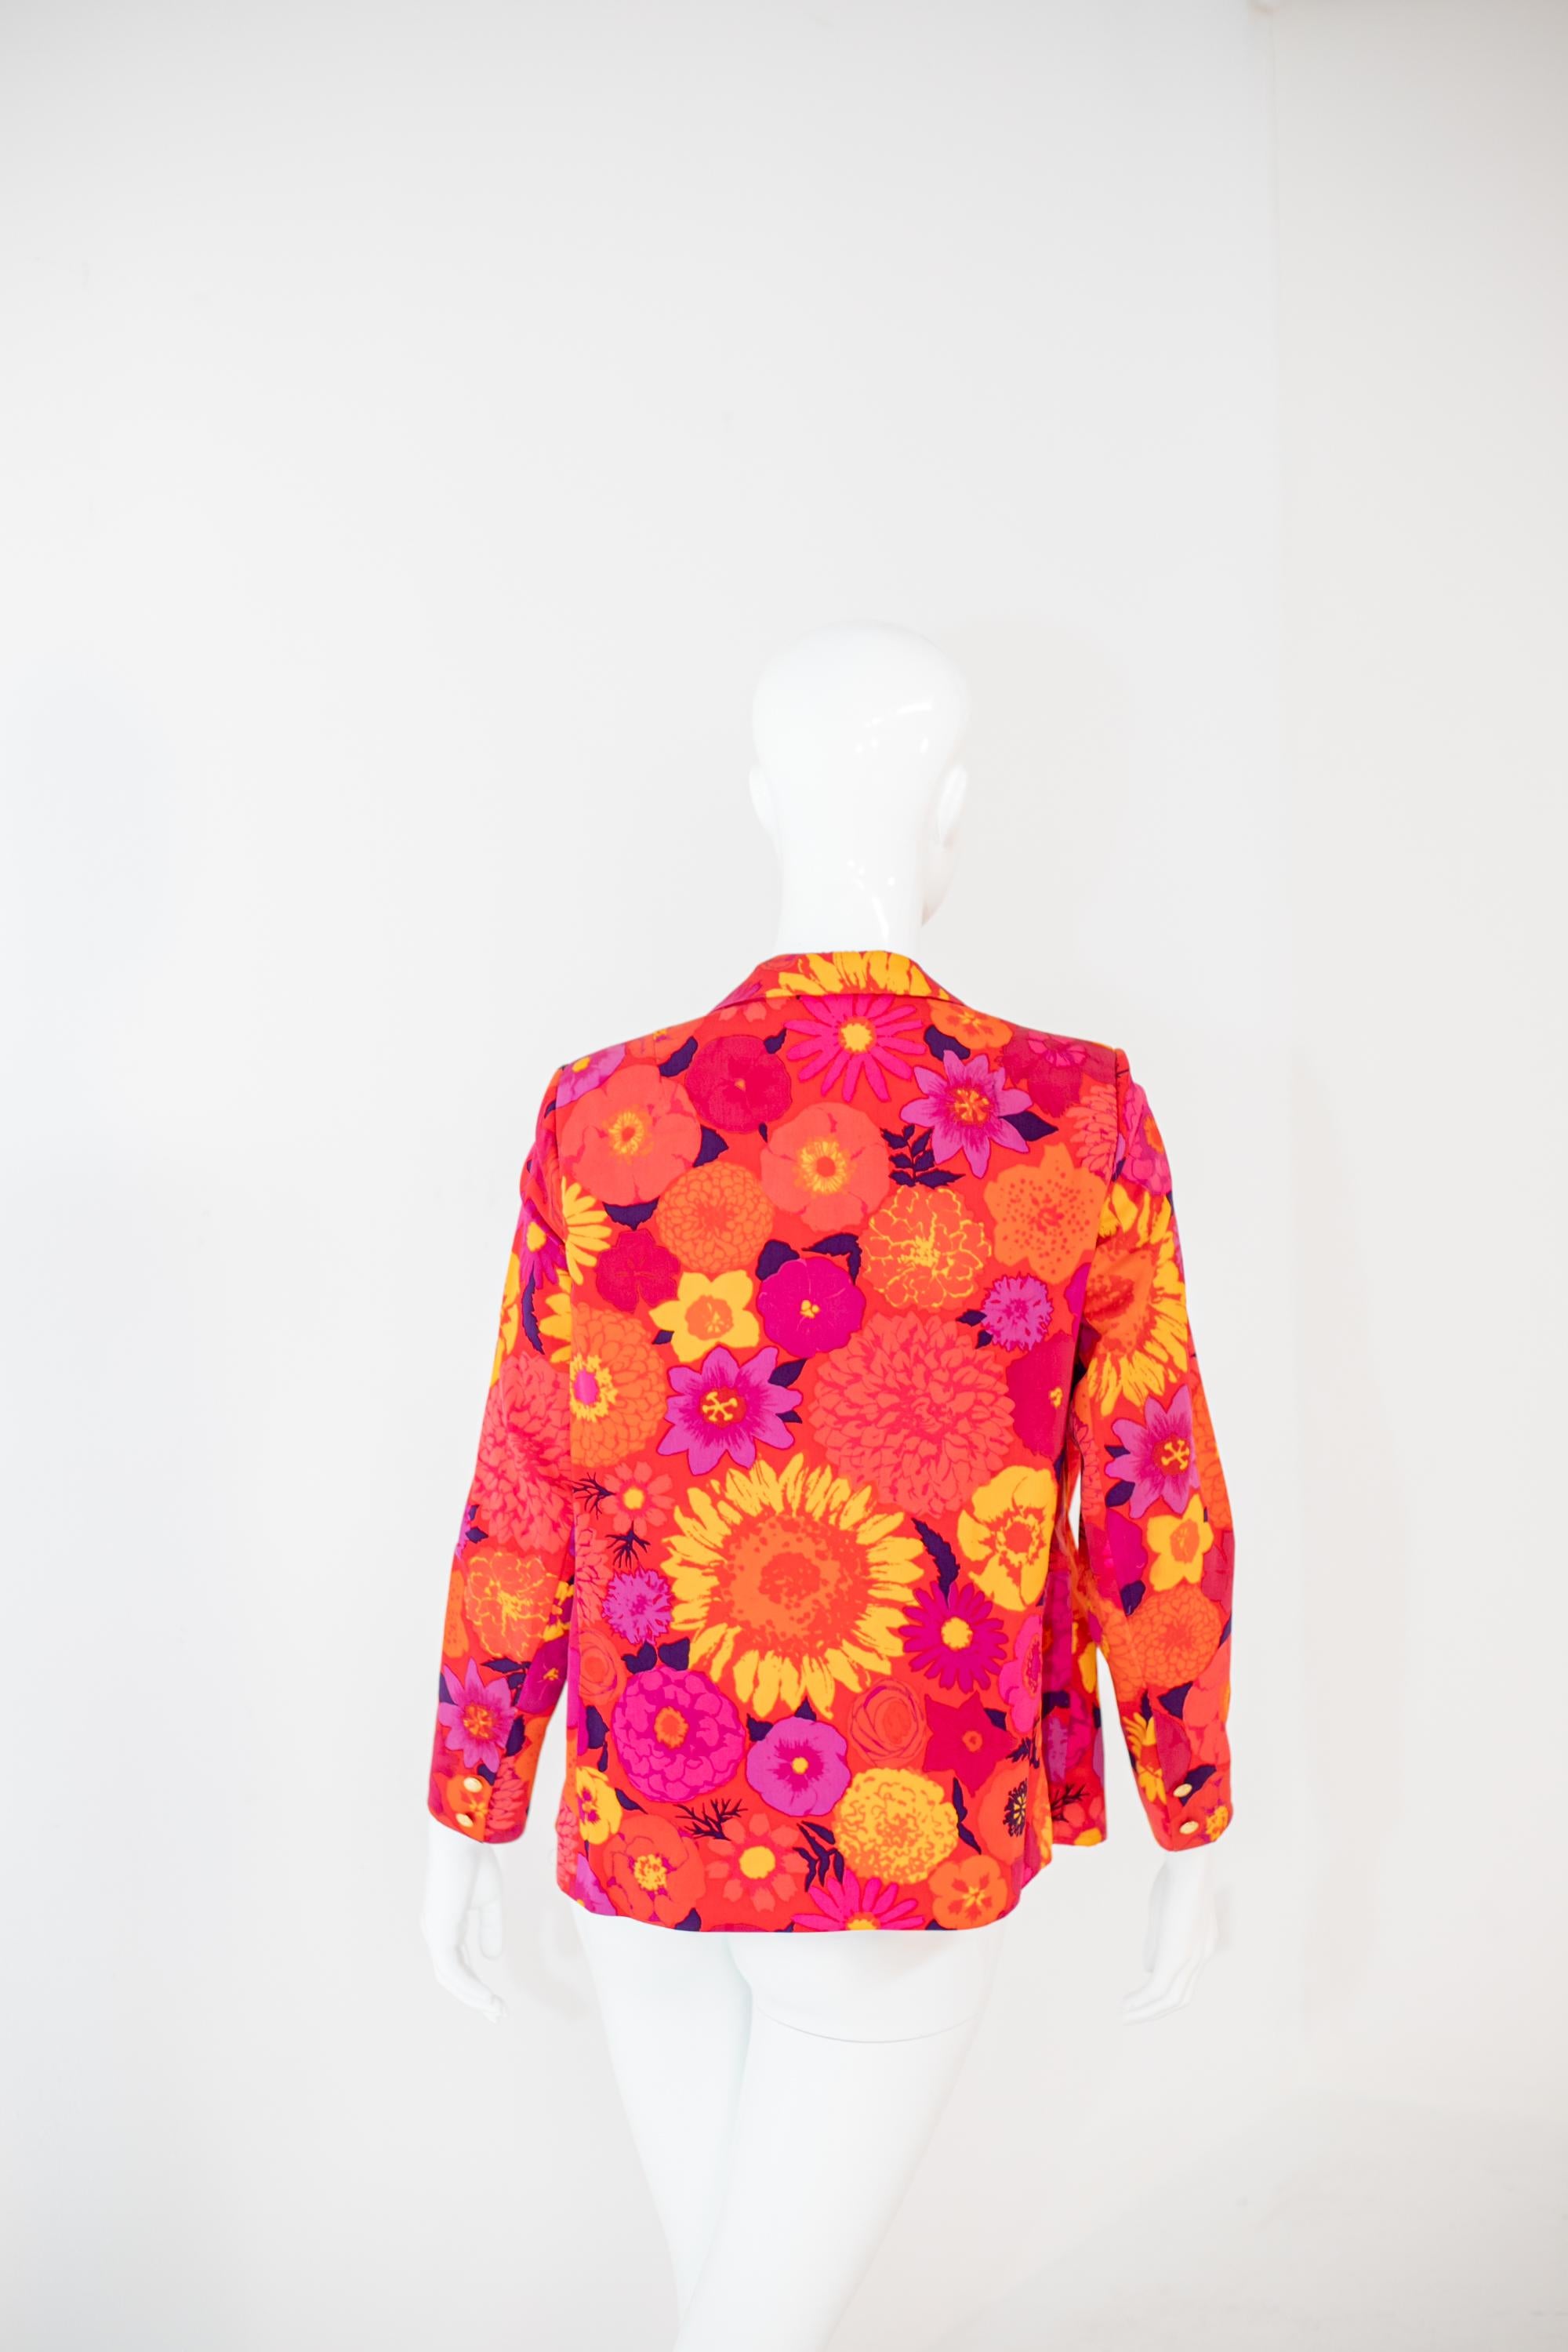 Women's Ken Scott Floral Stylish Blazer For Sale